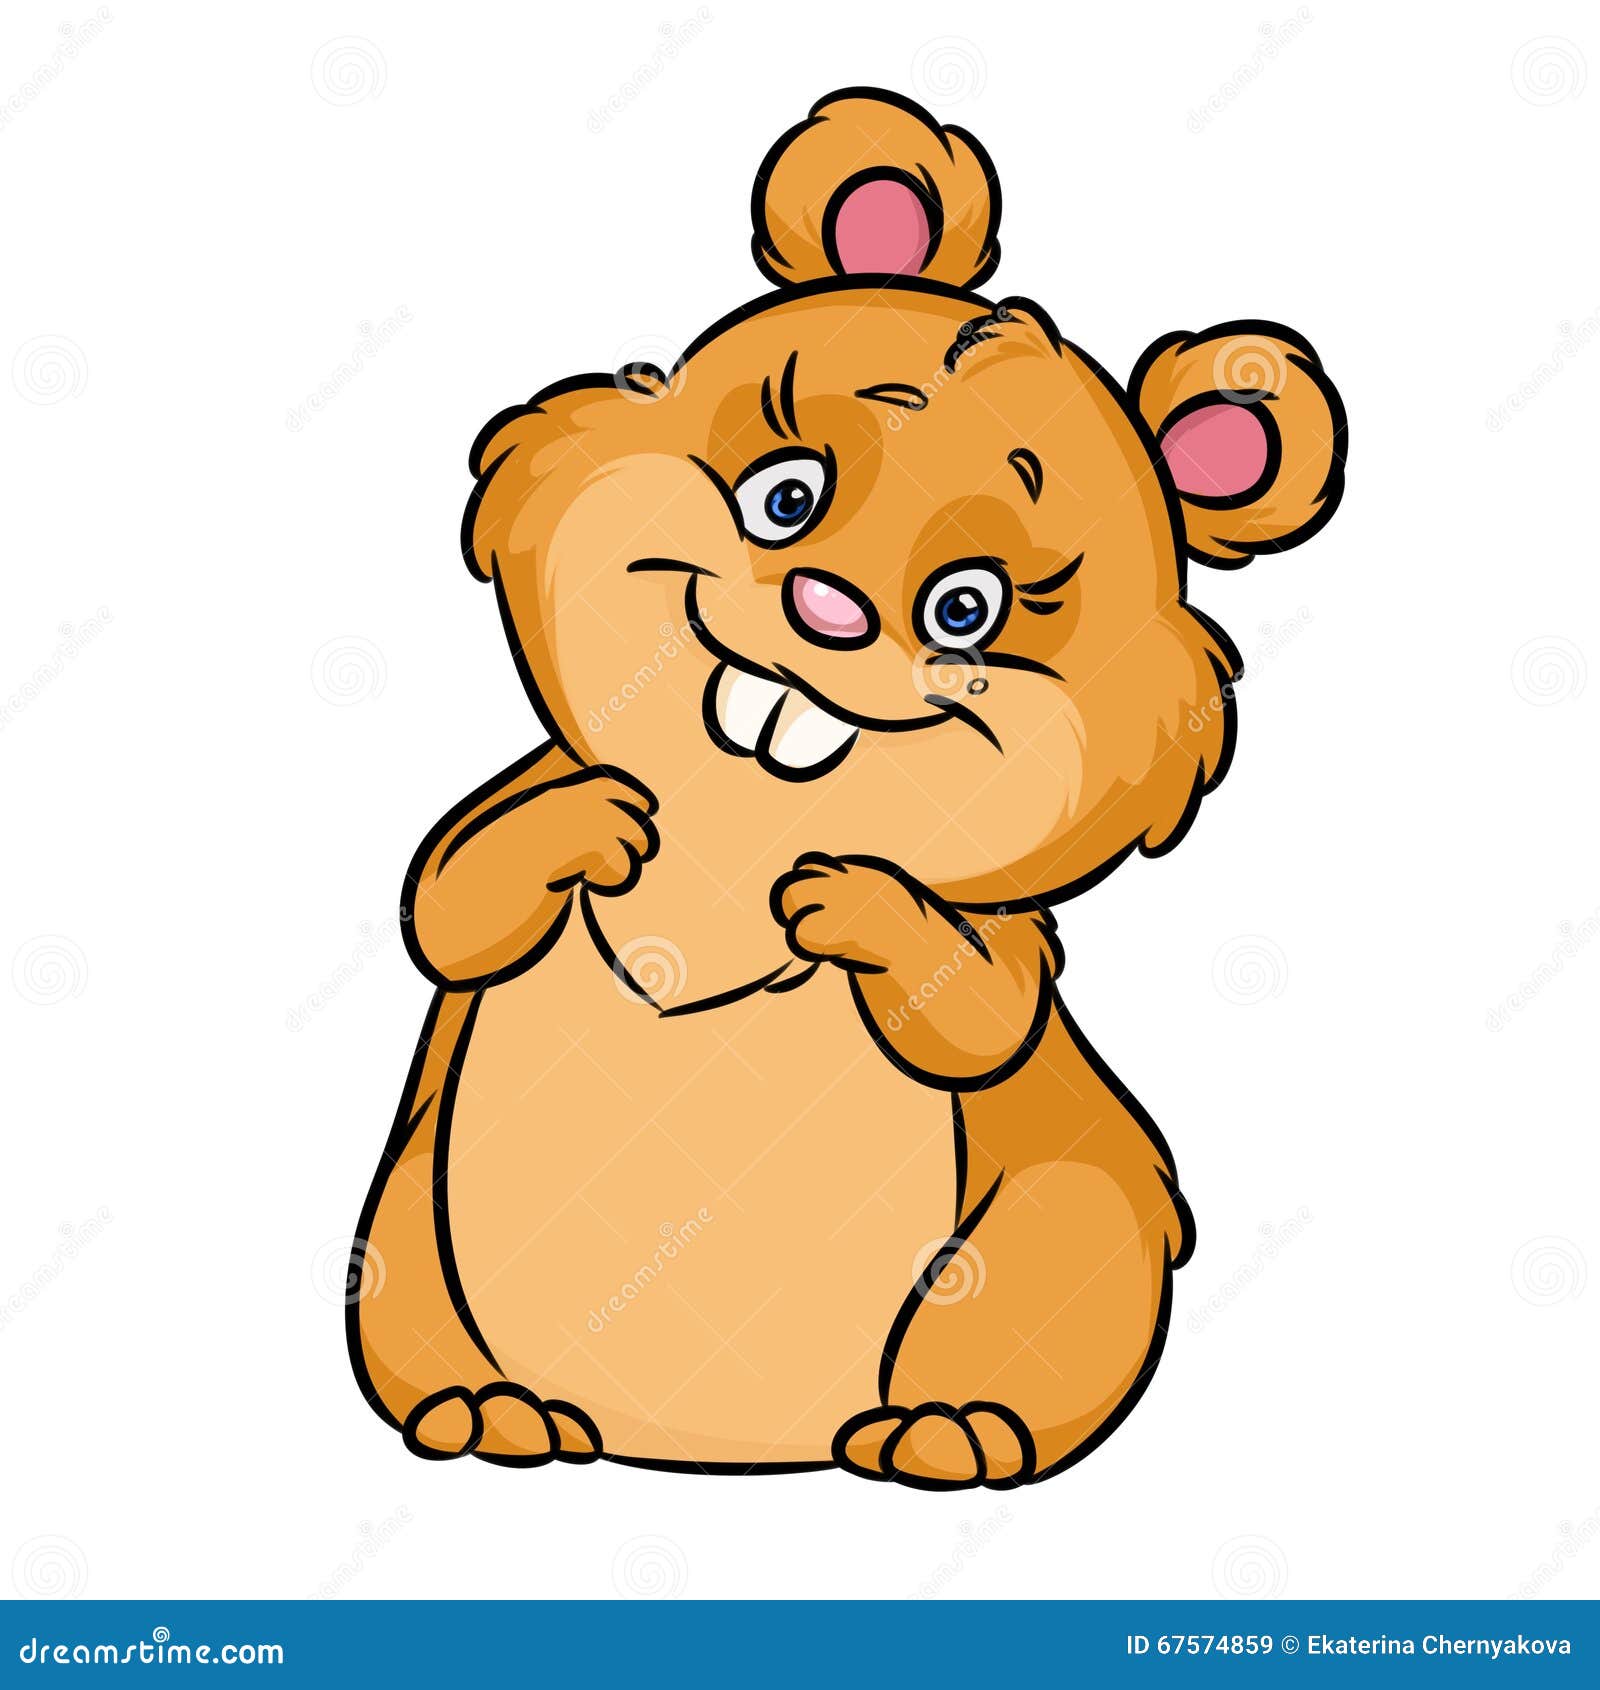 cheerful-hamster-cartoon-illustration-image-animal-character-67574859.jpg